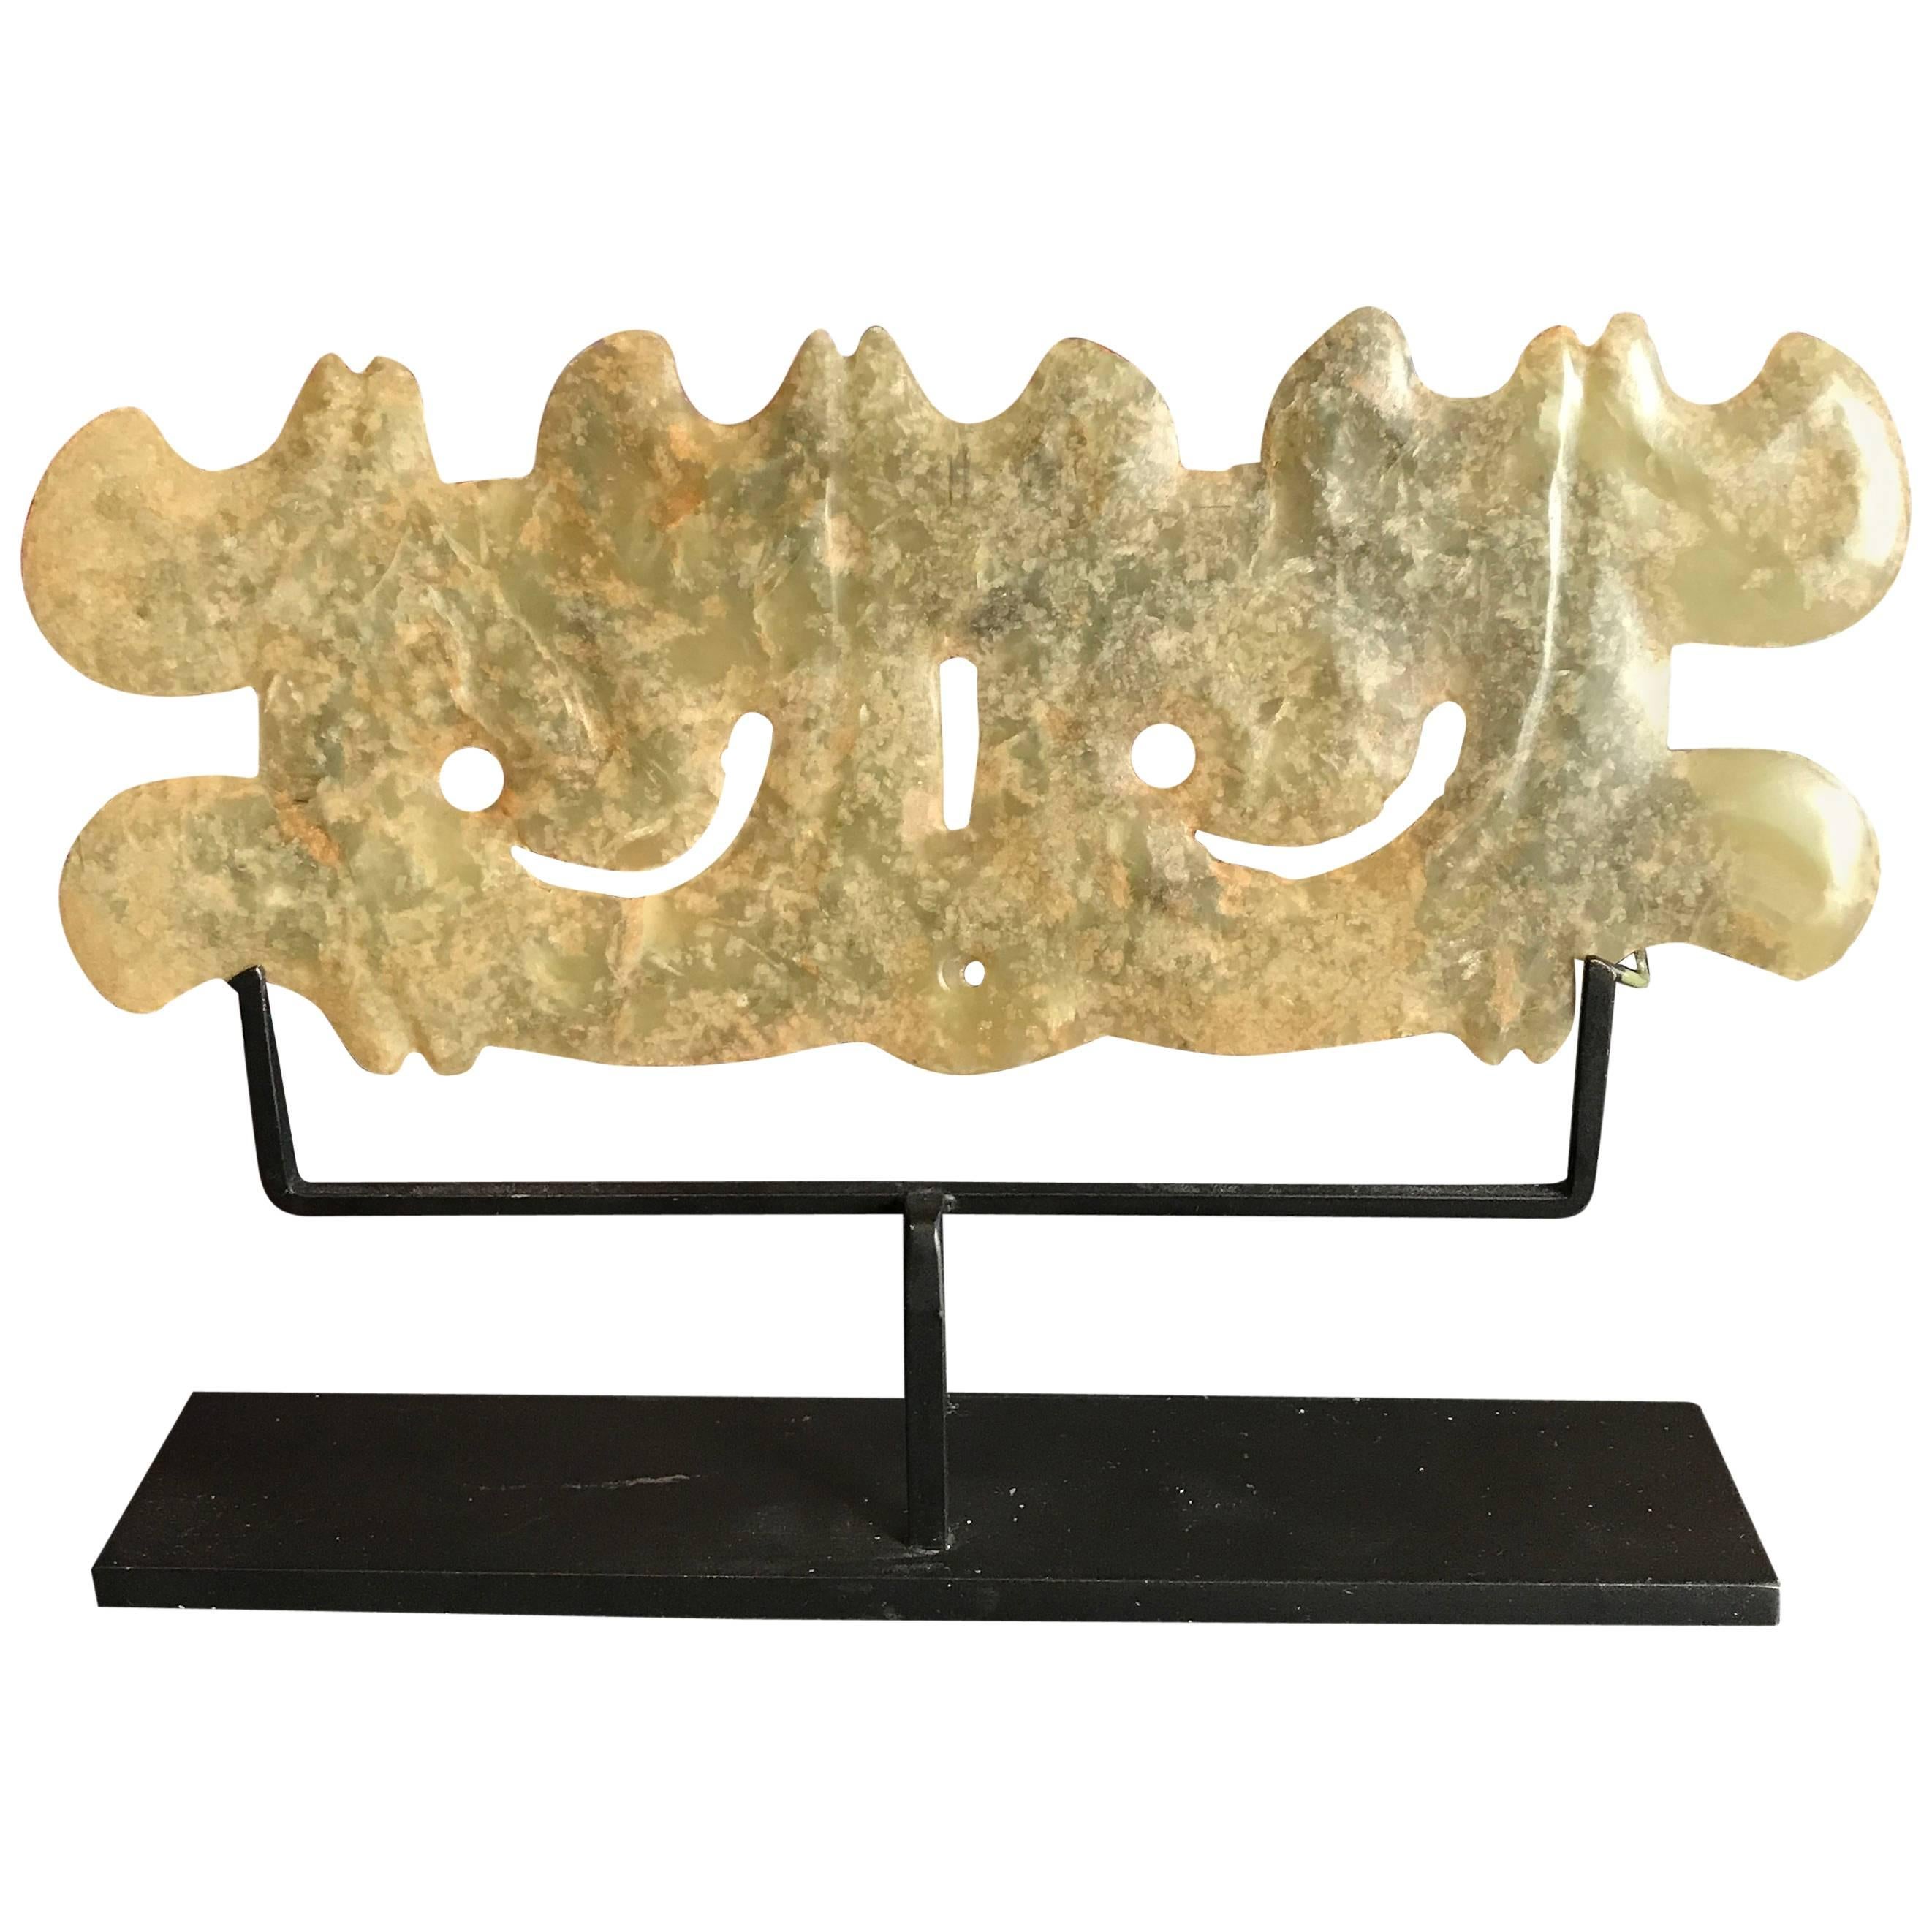 China Ancient Hongshan Culture Jade "Cloud & Hook" Ornament, 3500-3000 BC